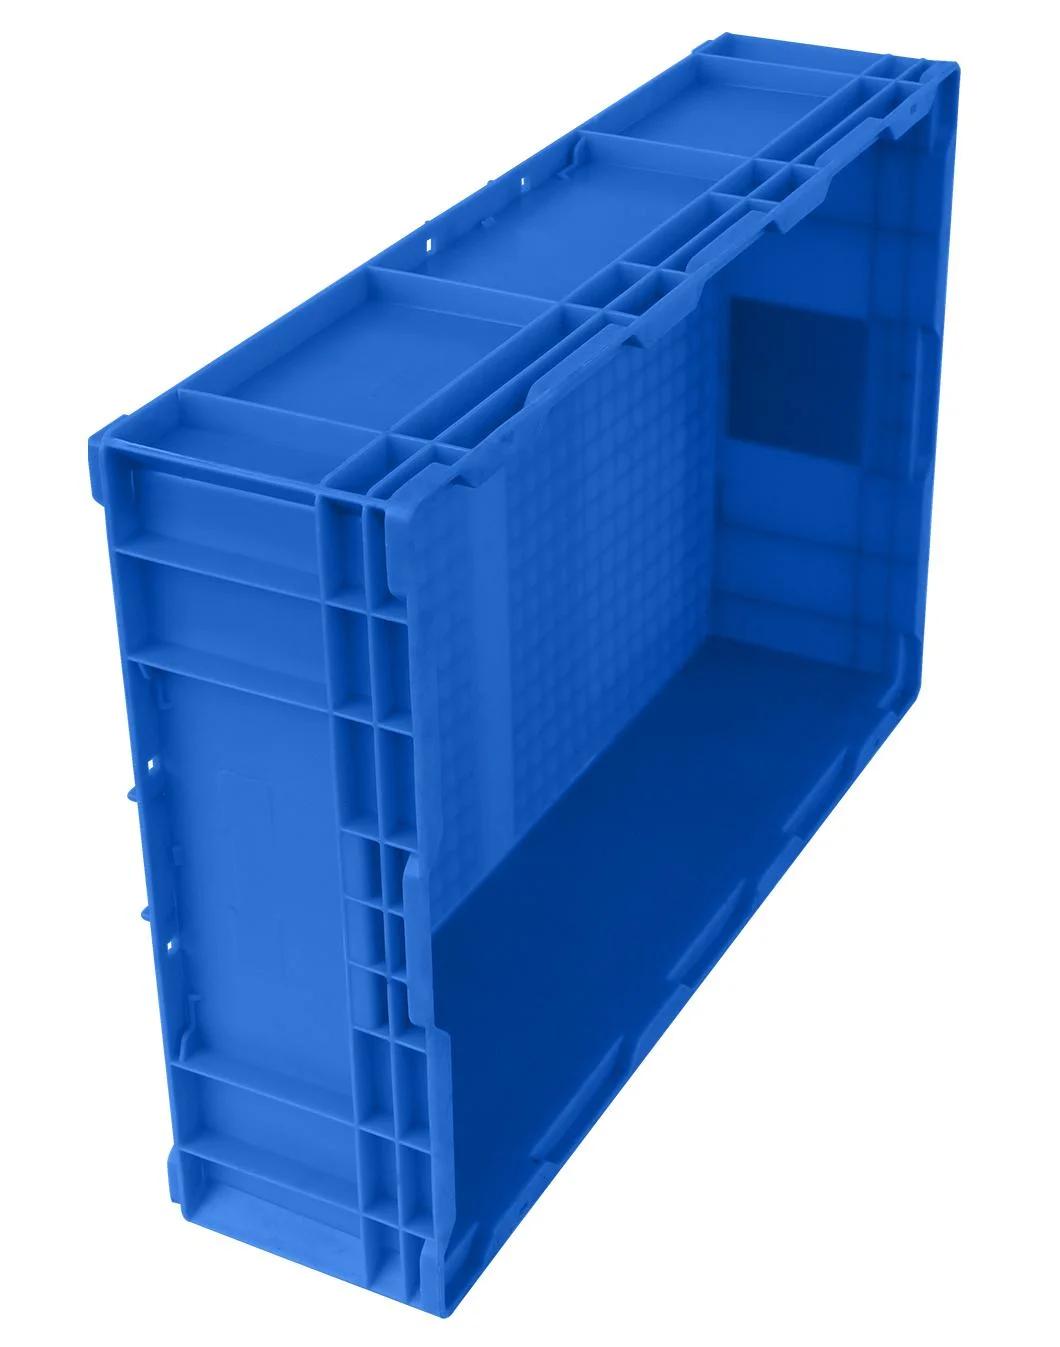 HP6b Plastic Turnover Logistics Container Box HP Standard Auto Parts Logistic Box Durable Opaque Plastic Storage Boxes